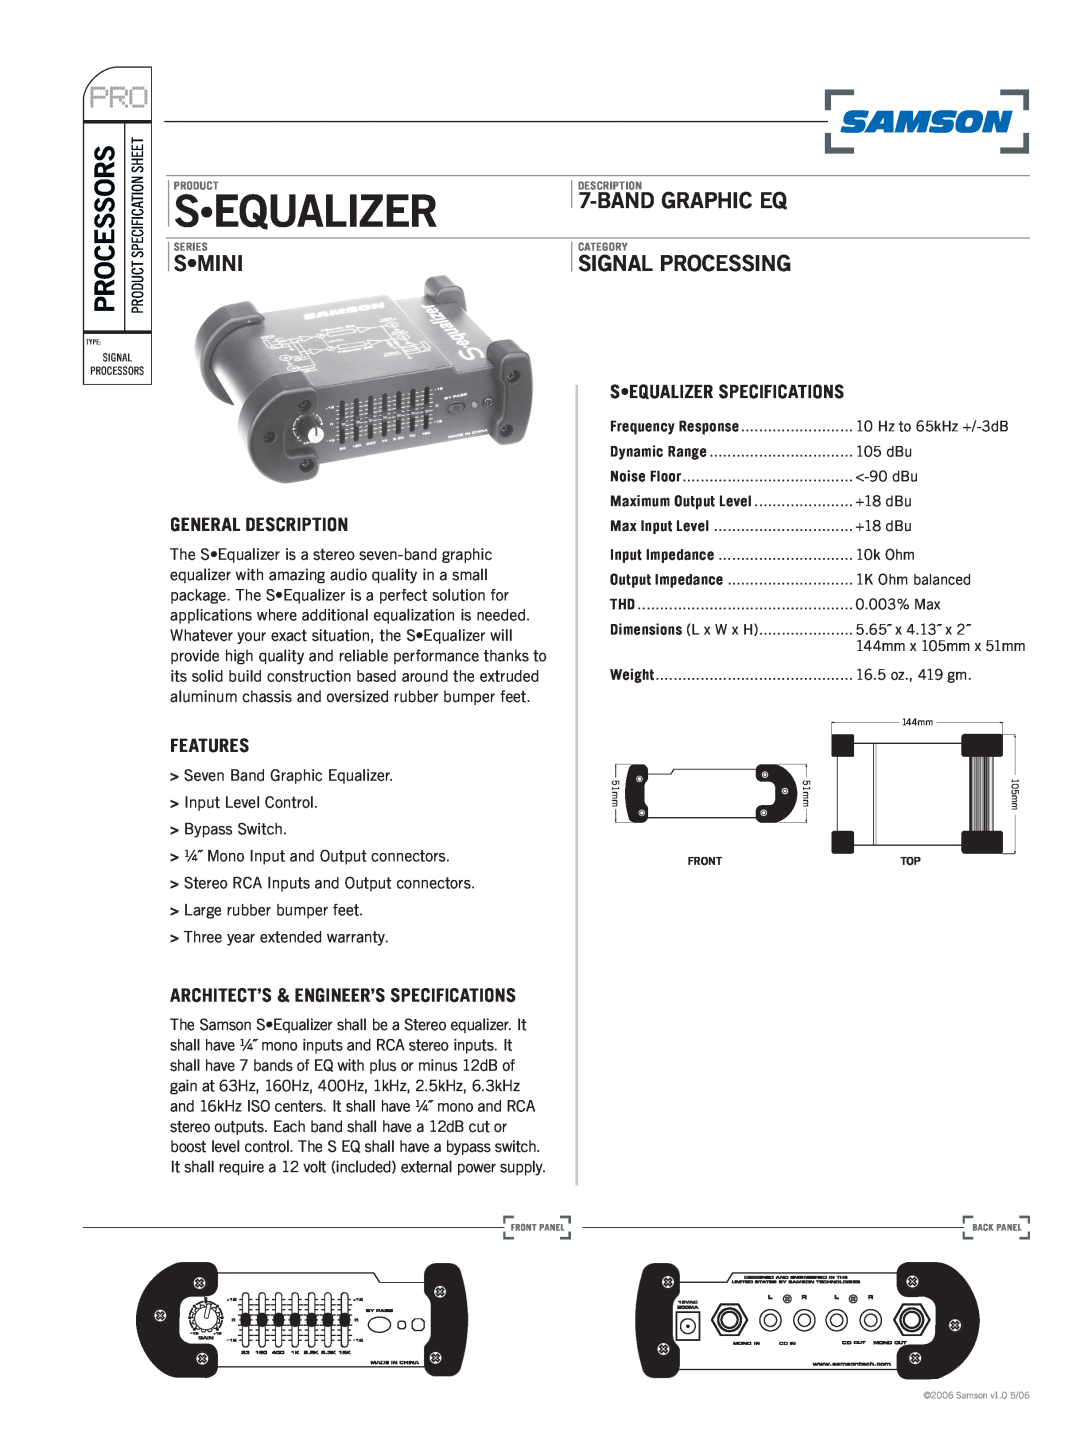 Samson S Equalizer specifications Processors, S Mini, Bandgraphic Eq, Signal Processing, General Description, Features 